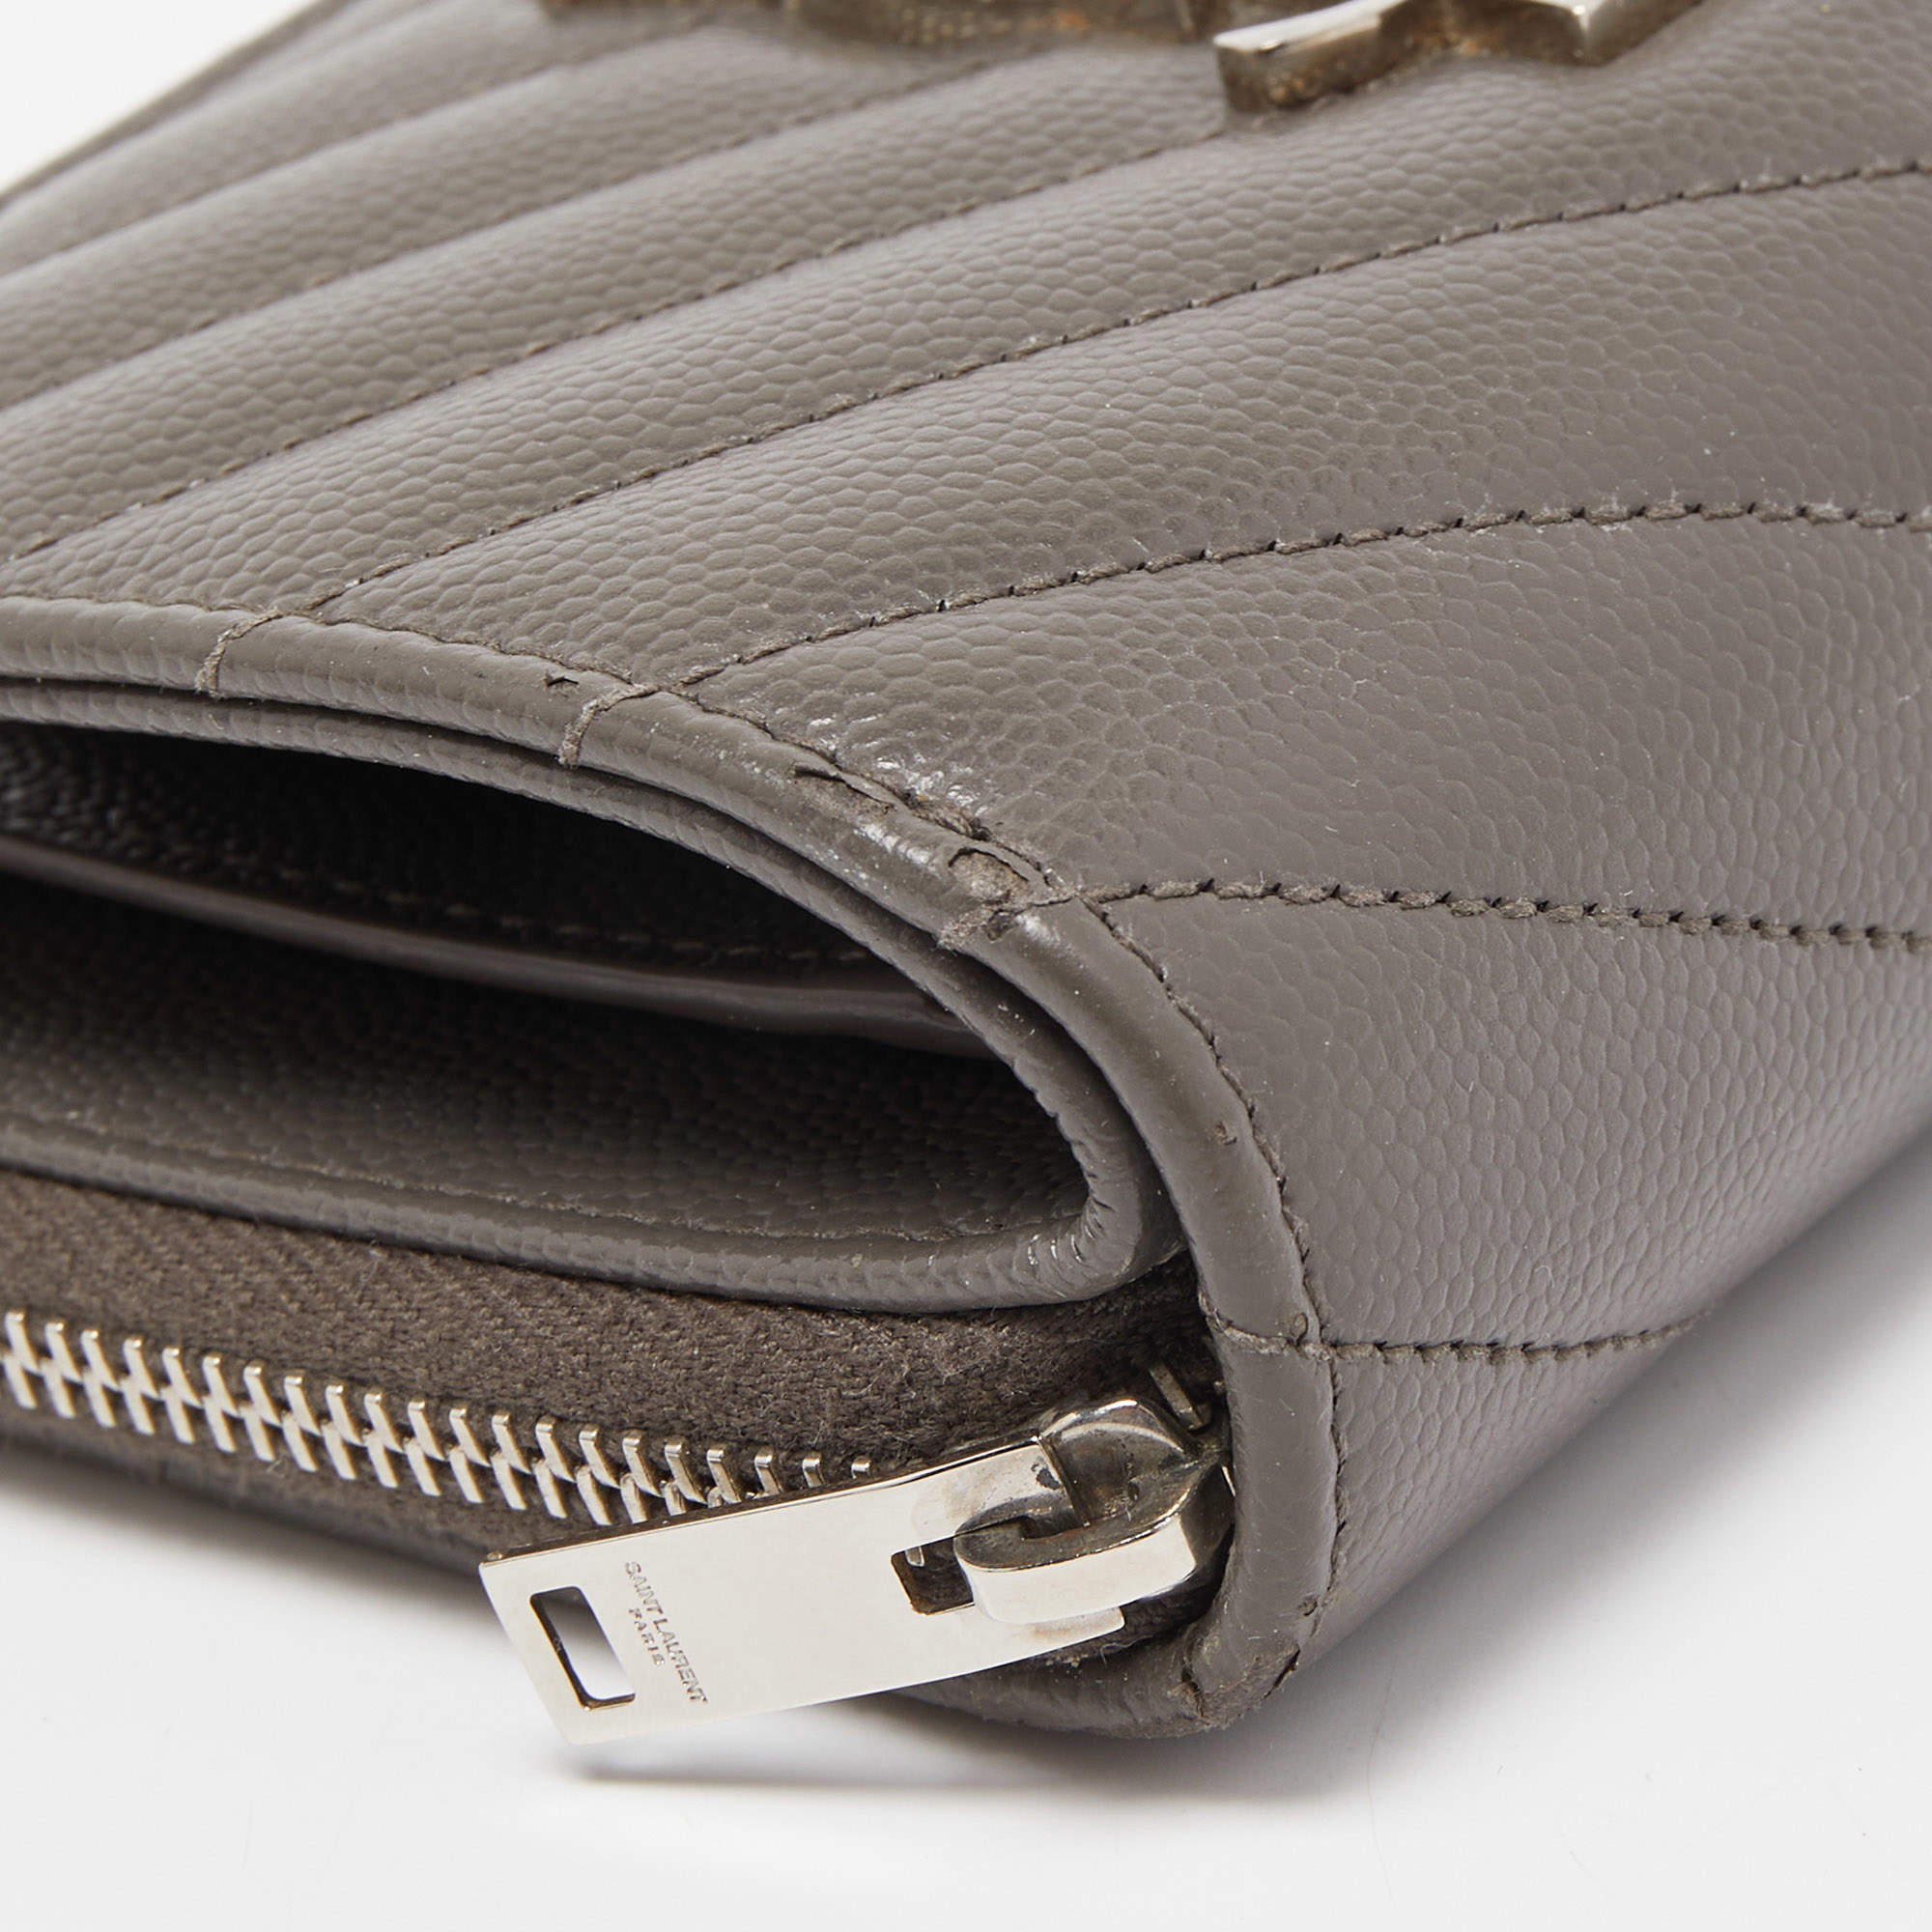 Saint Laurent Black Quilted Monogram Matelasse Leather Zip-Around Wallet 49YS37S